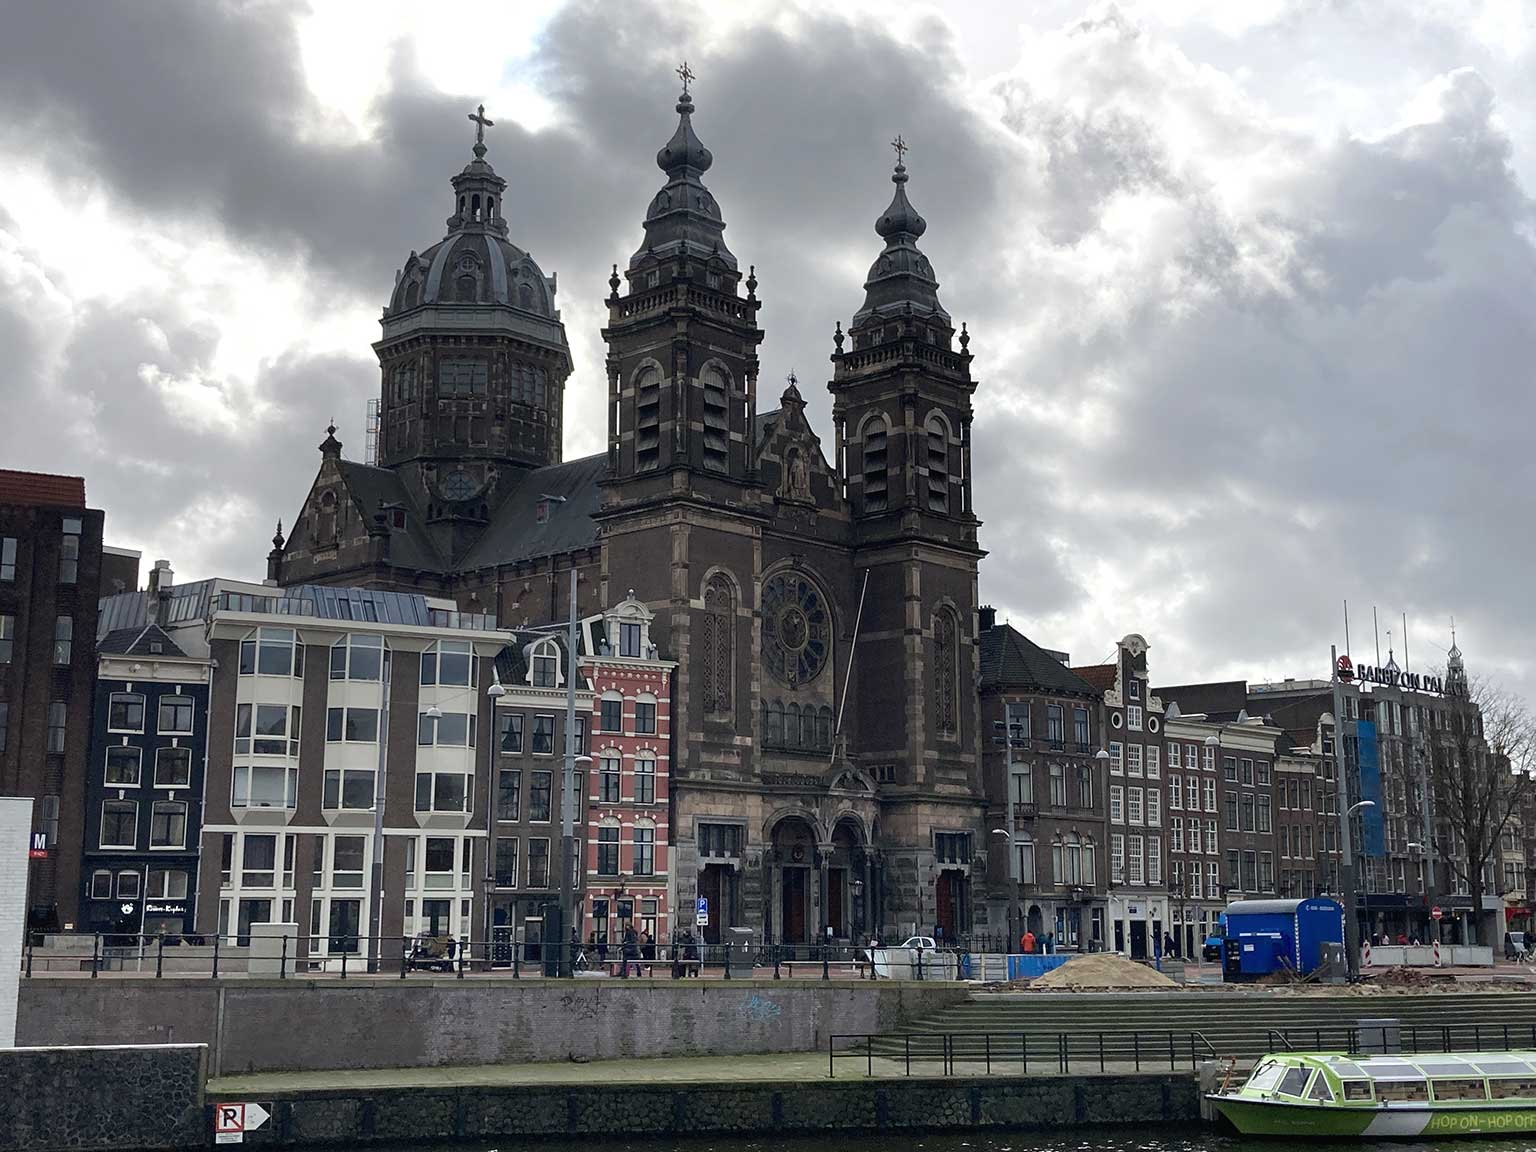 Saint Nicholas Church, Amsterdam, seen from across the Prins Hendrikkade